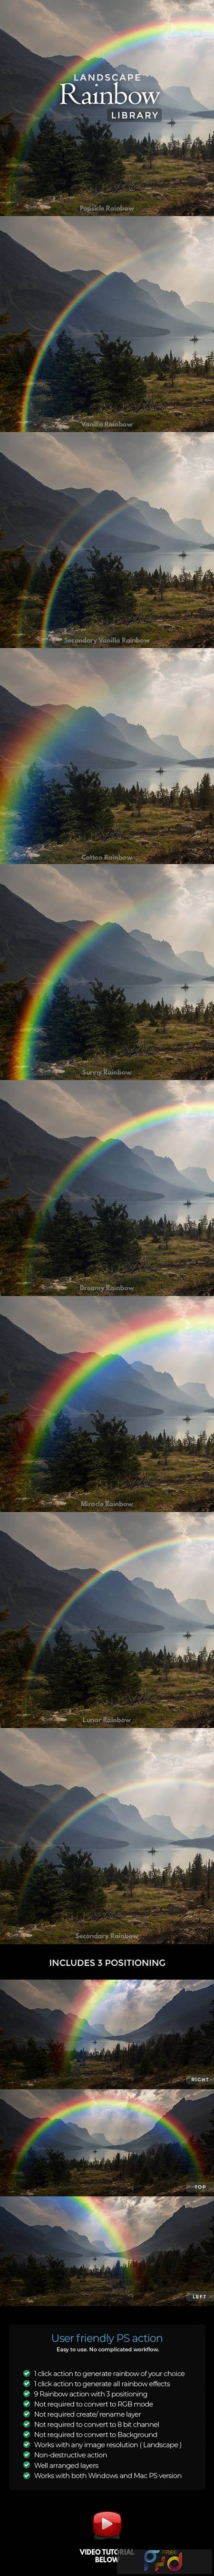 Landscape Rainbow Library   Photoshop Action